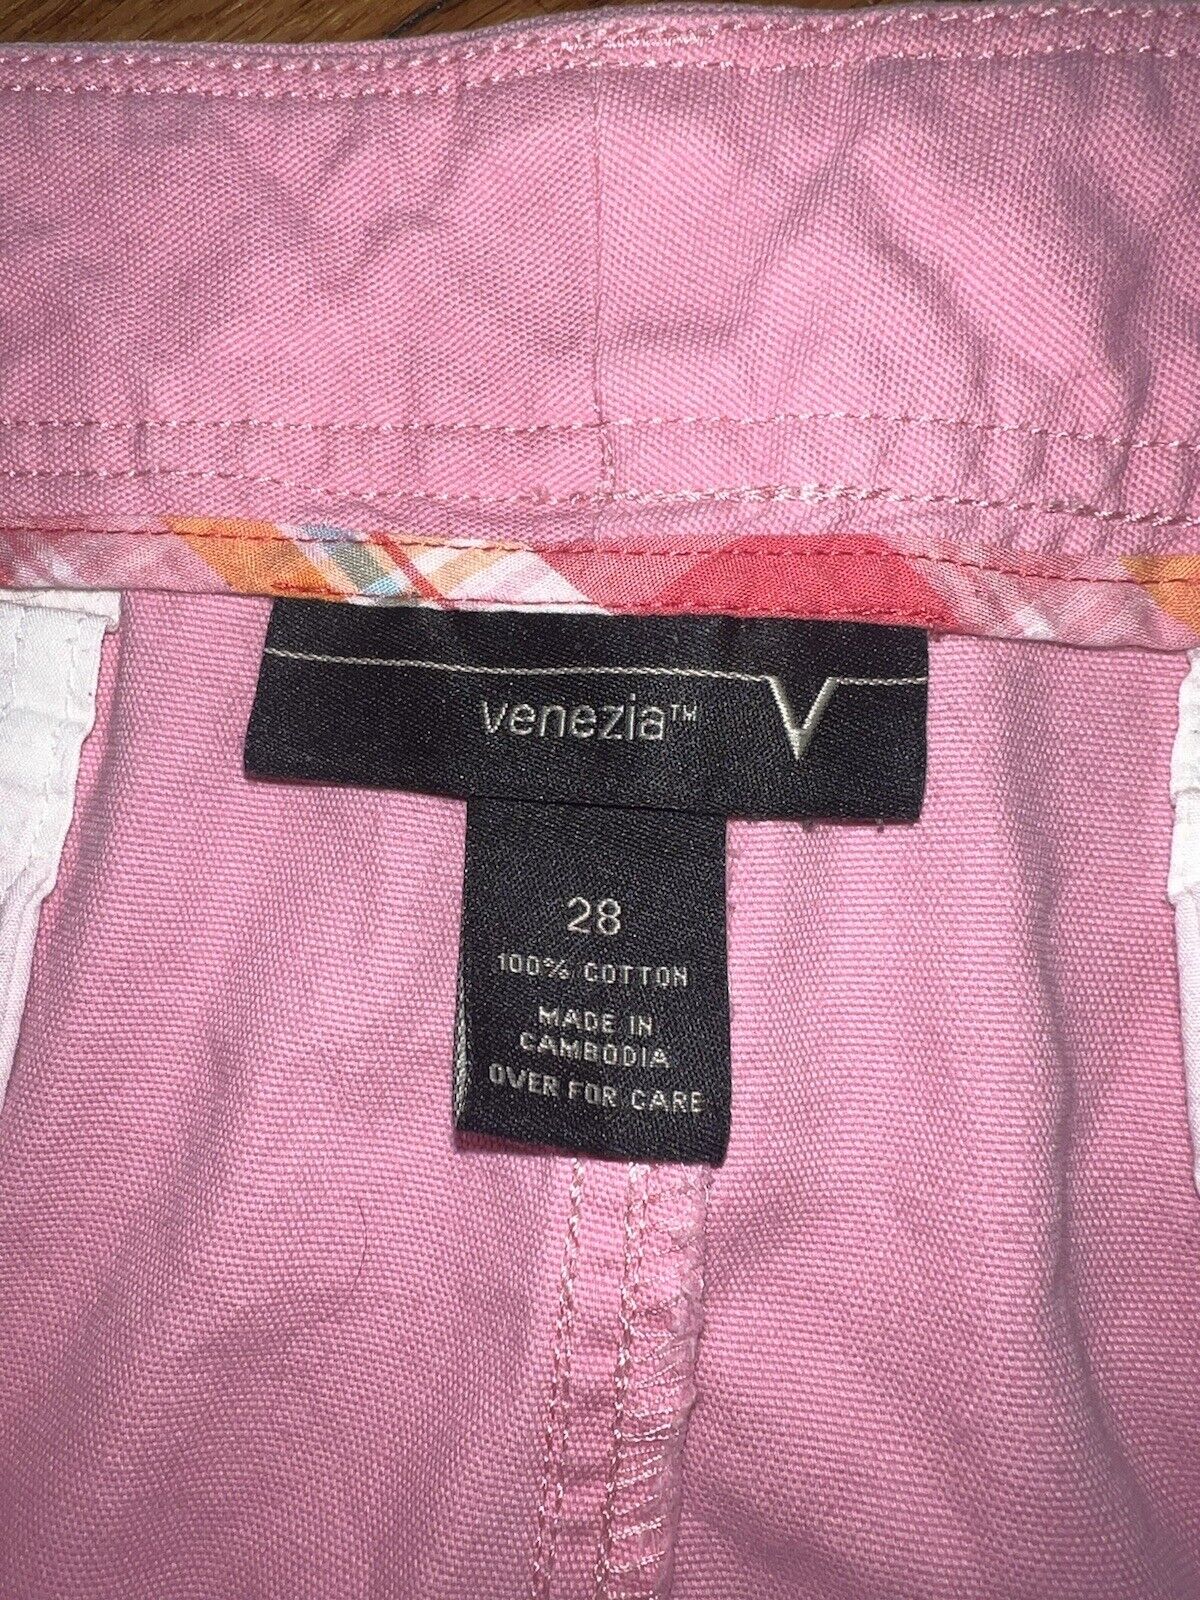 Venezia Women’s Baby Pink Khaki Shorts Size 28 - image 5